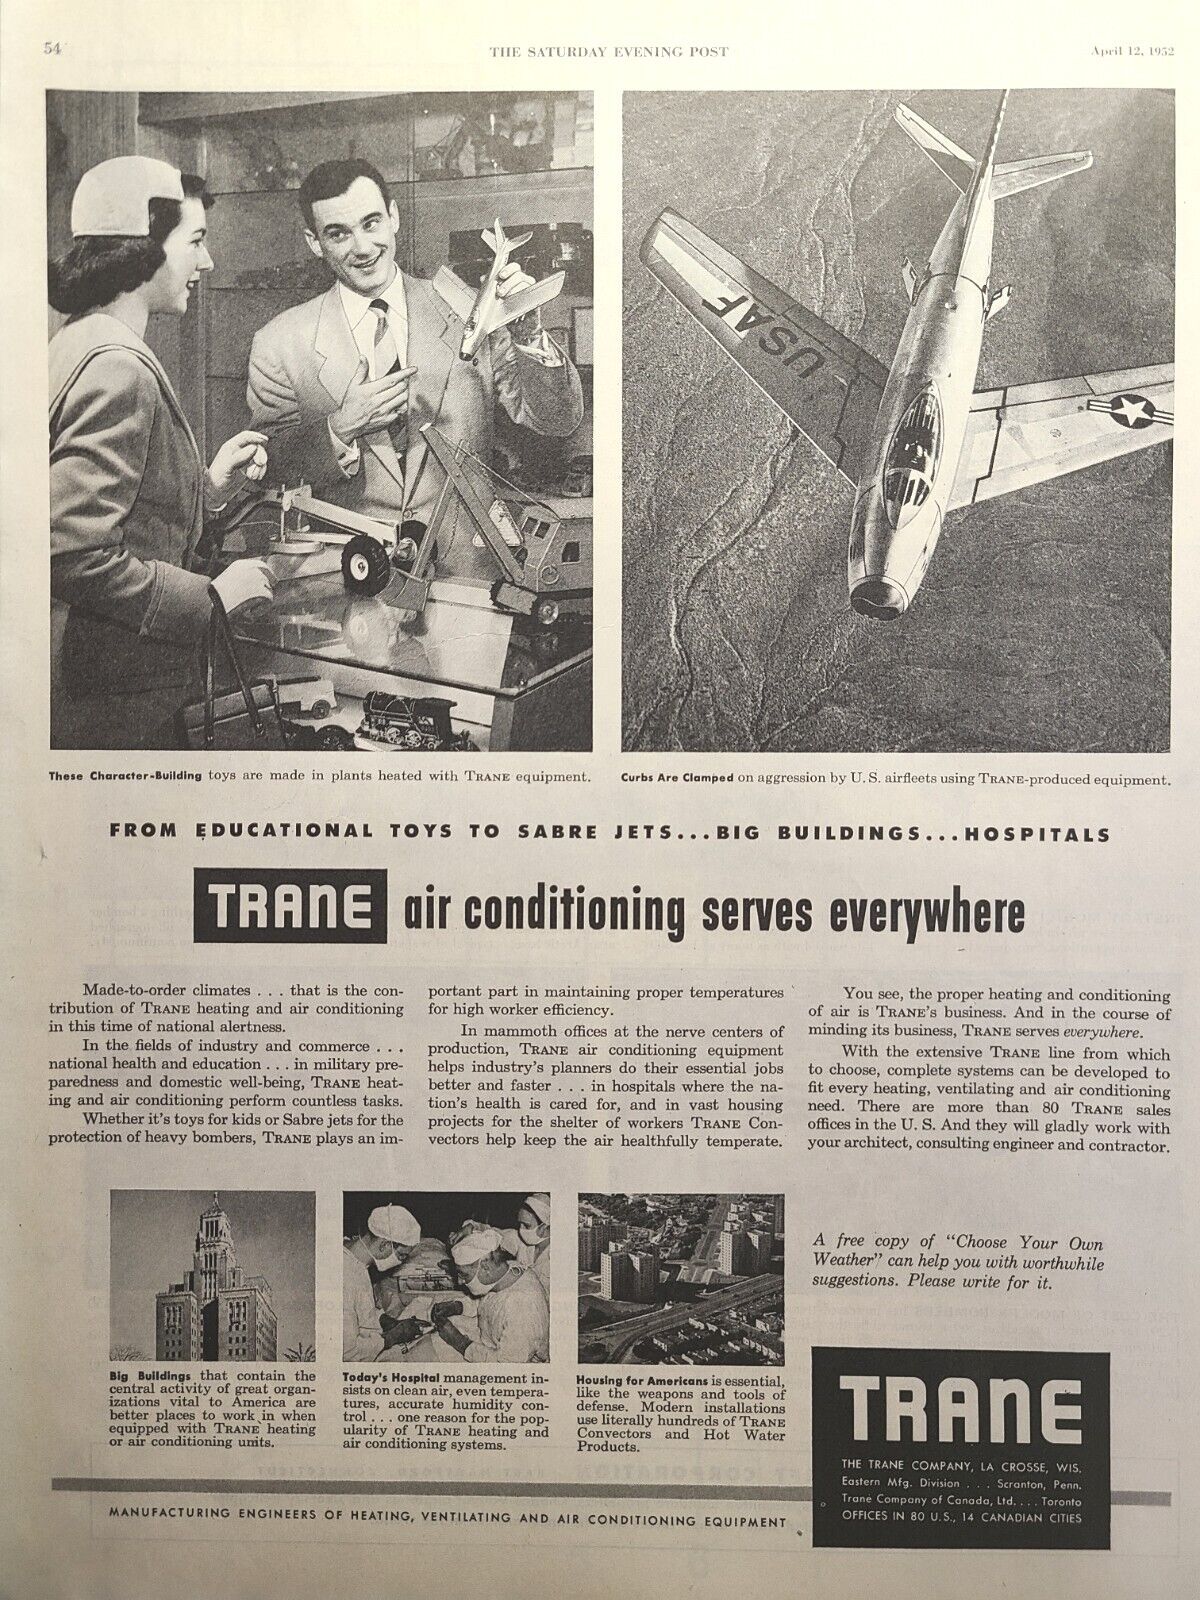 Trane Air Conditioning Commerical Defense La Crosse WI Vintage Print Ad 1952